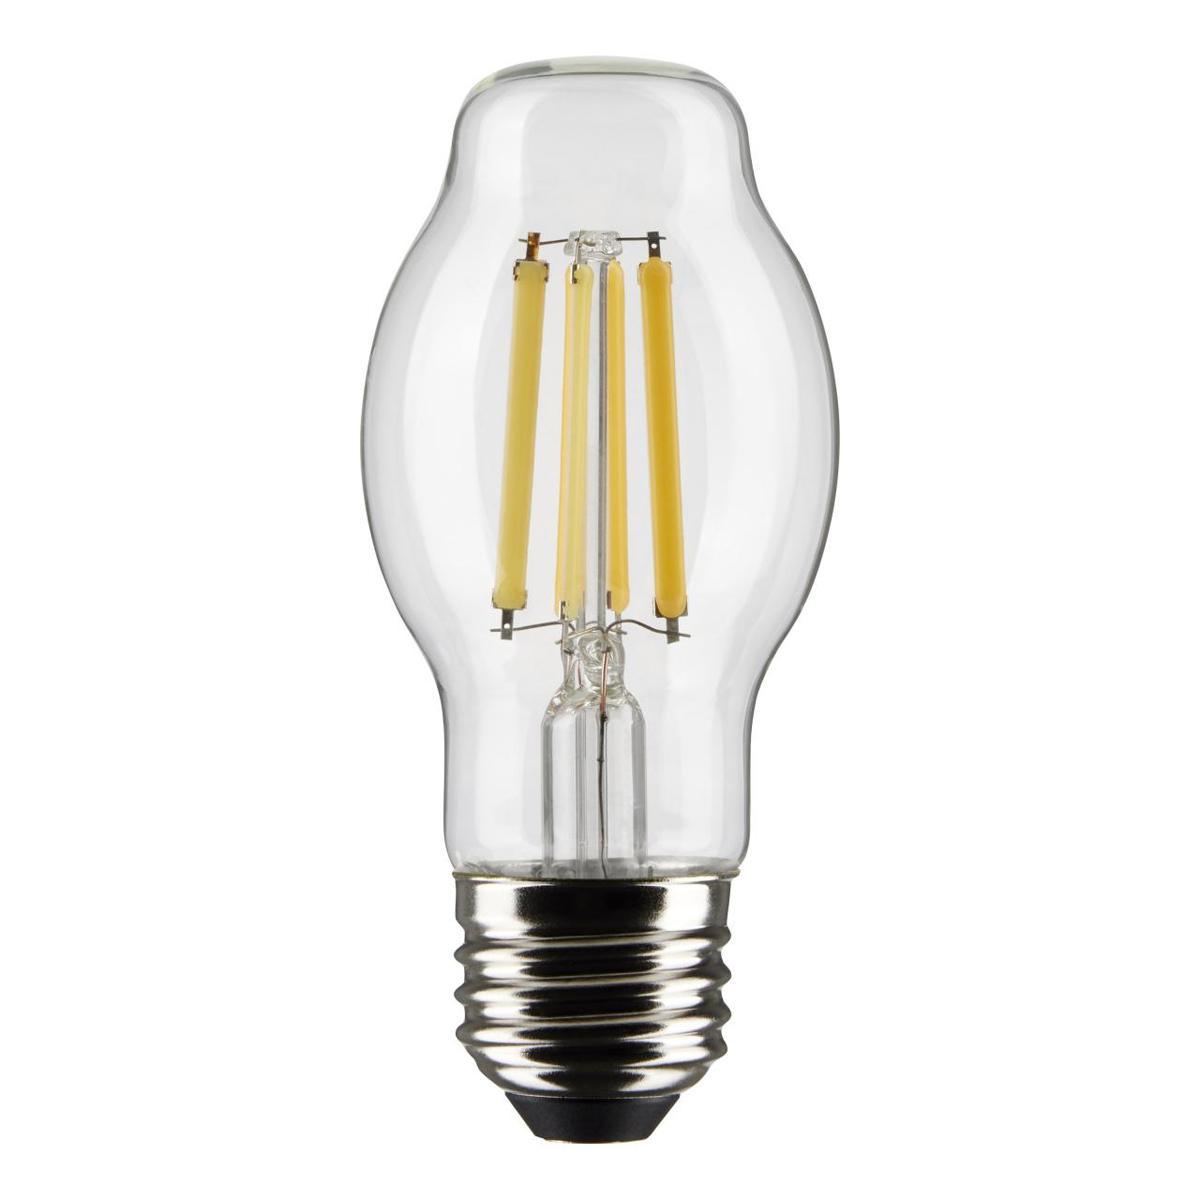 BT15 Bulged Tube Filament LED Bulb, 8 Watt, 800 Lumens, 2700K, E26 Medium Base, Clear Finish, Pack Of 2 - Bees Lighting